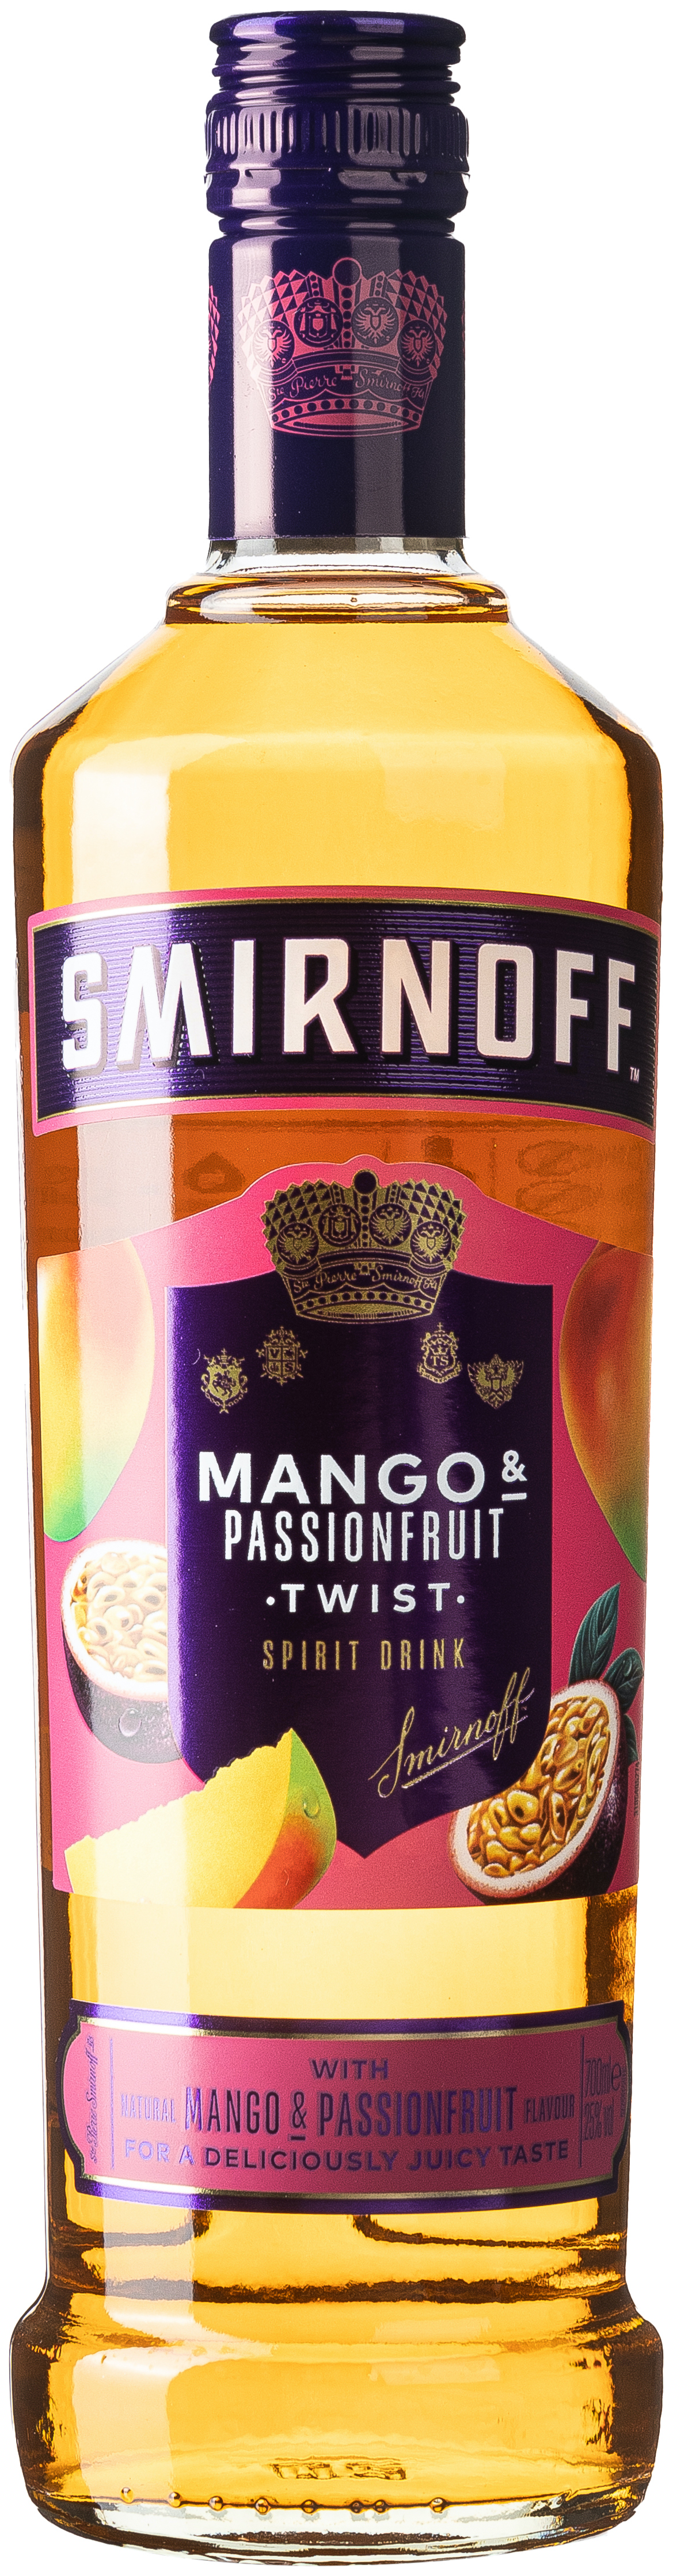 Smirnoff Mango & Passionfruit Twist 25% vol. 0,7L